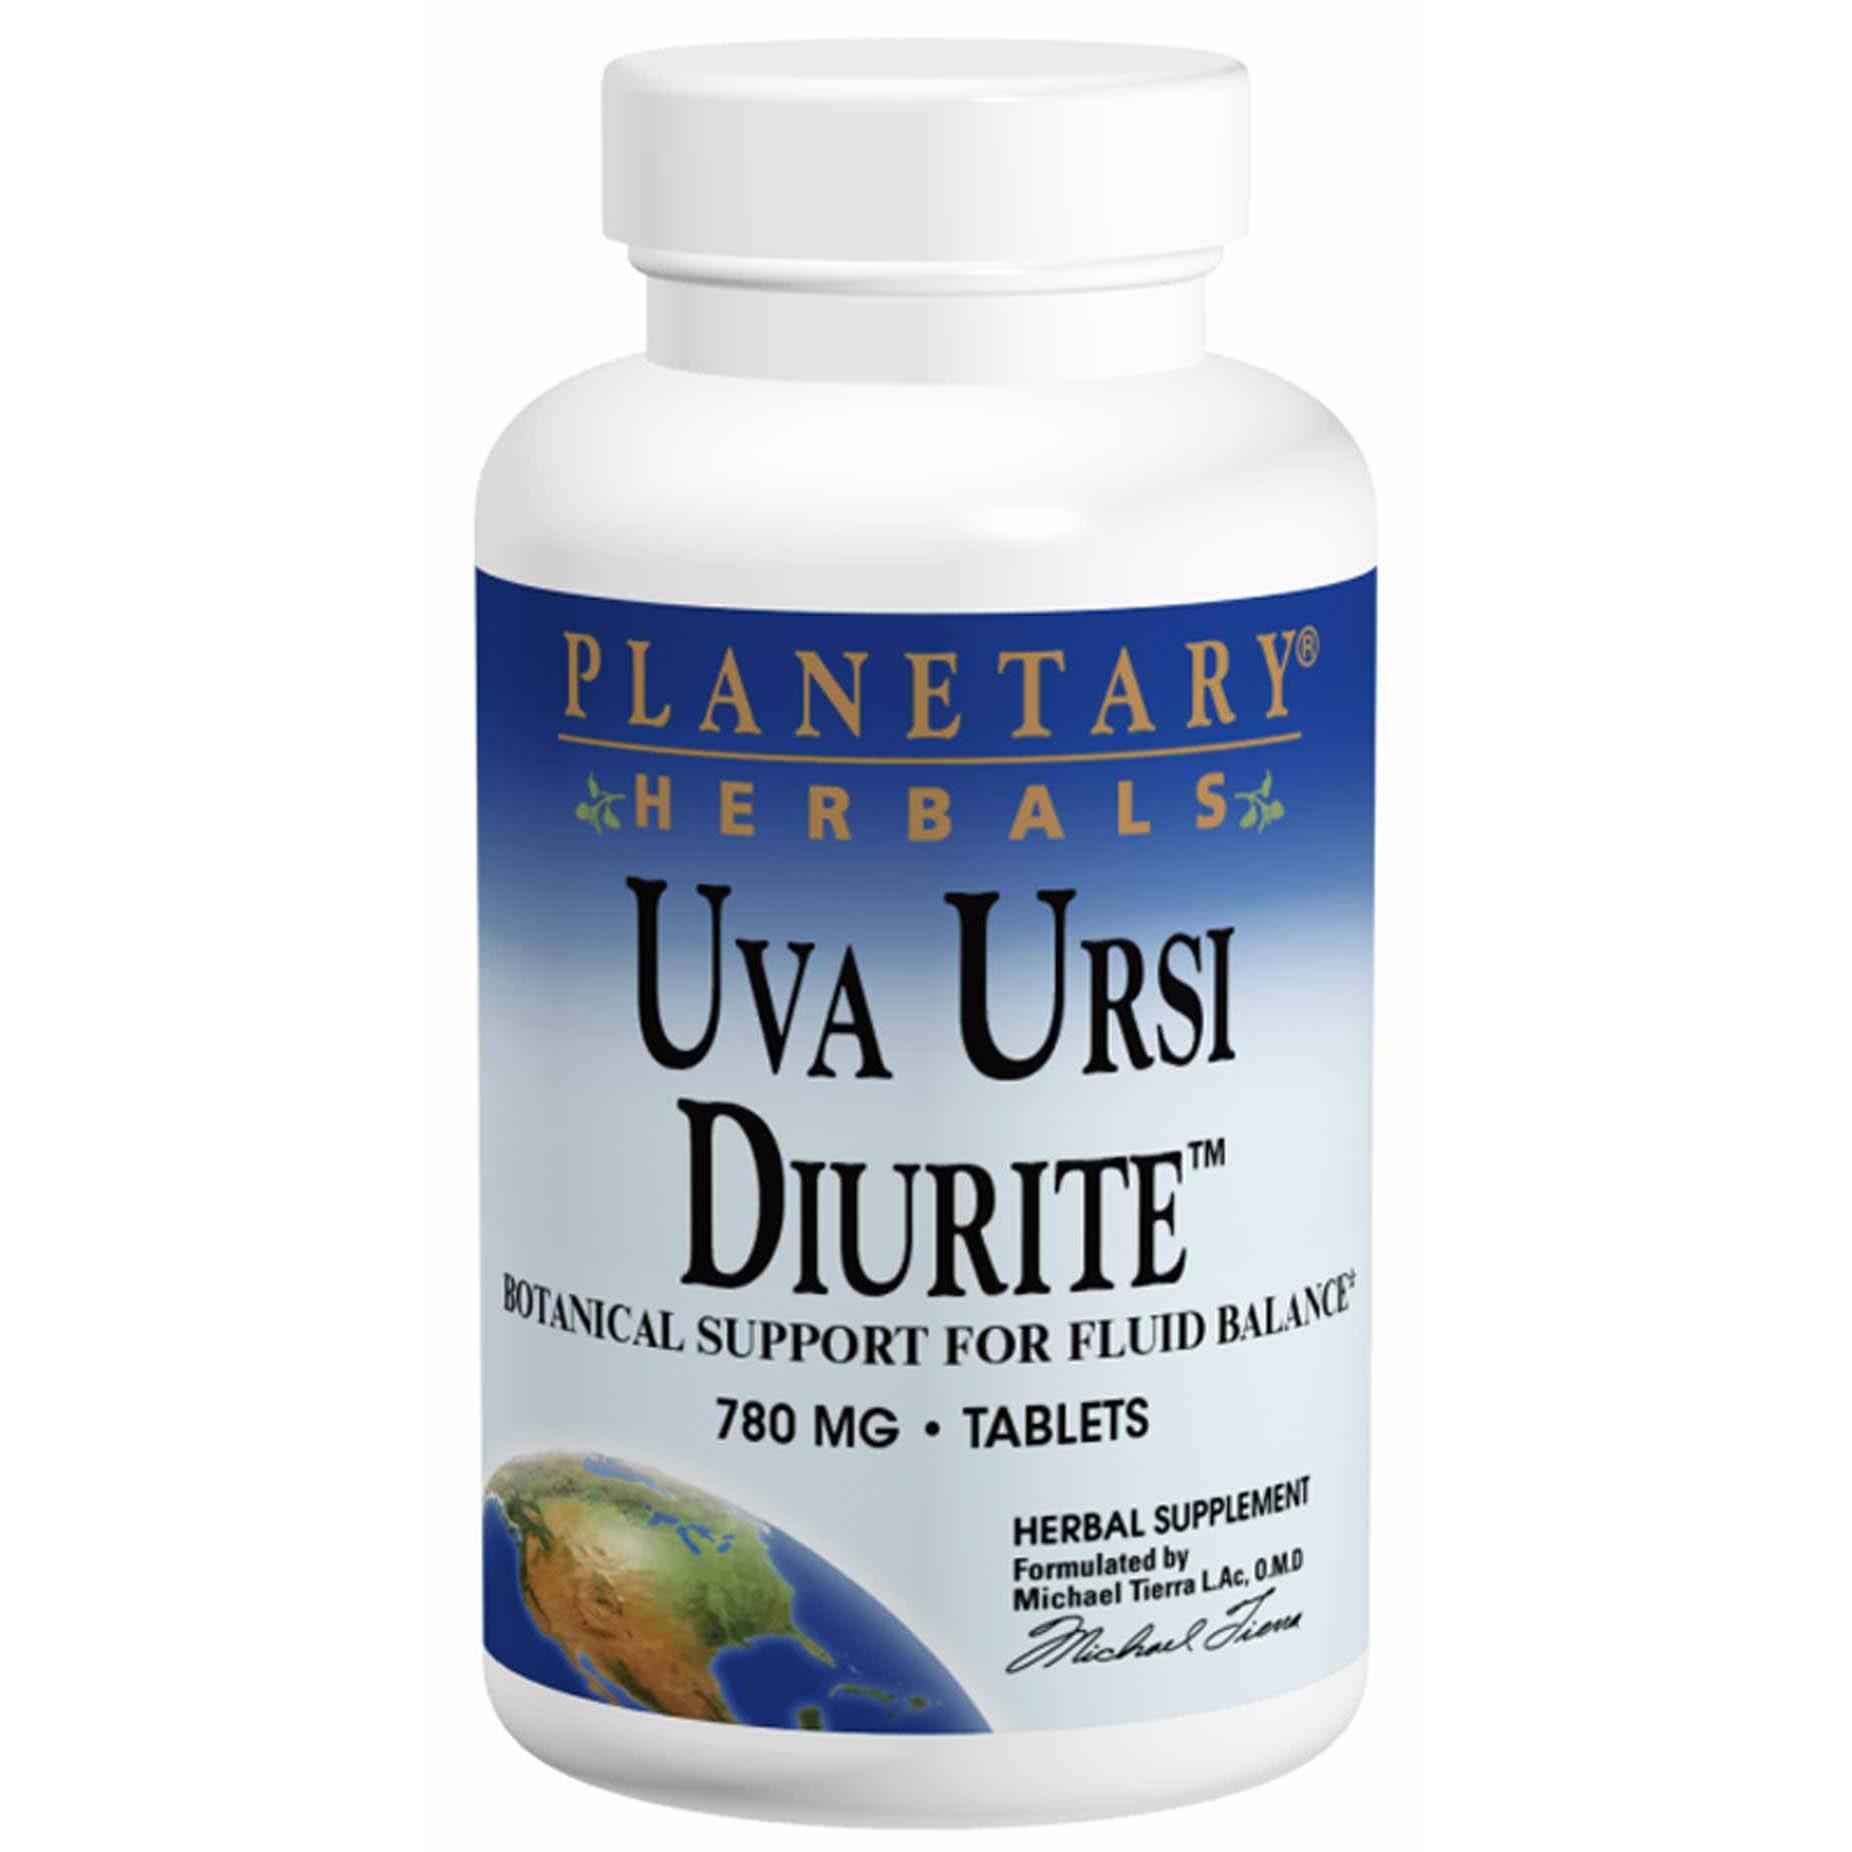 Planetary Herbals Uva Ursi, 780 mg, 72 Tablets